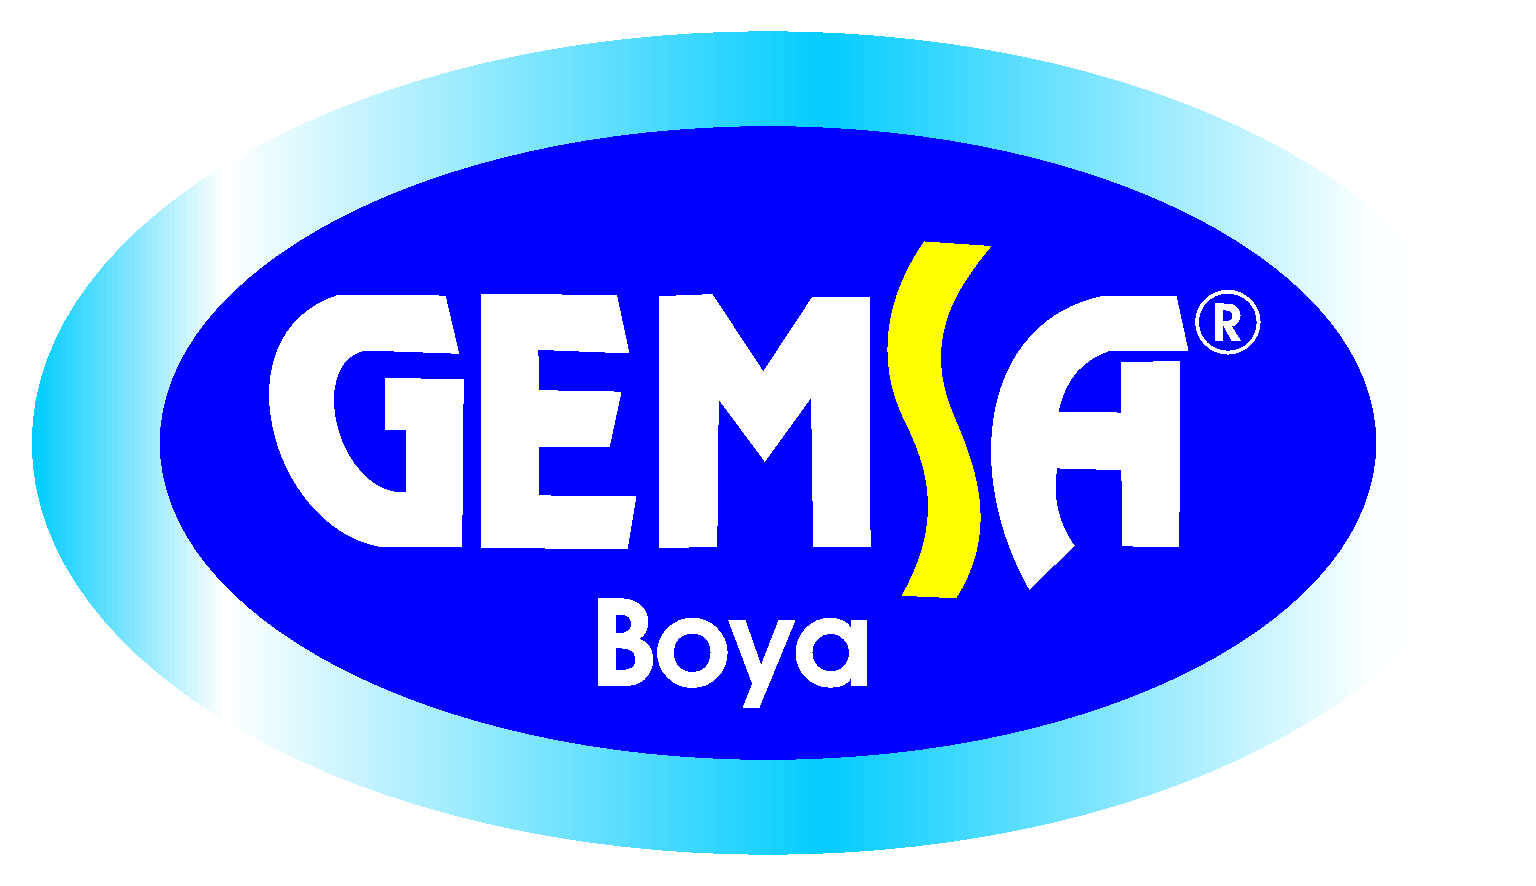 GemsaBoya